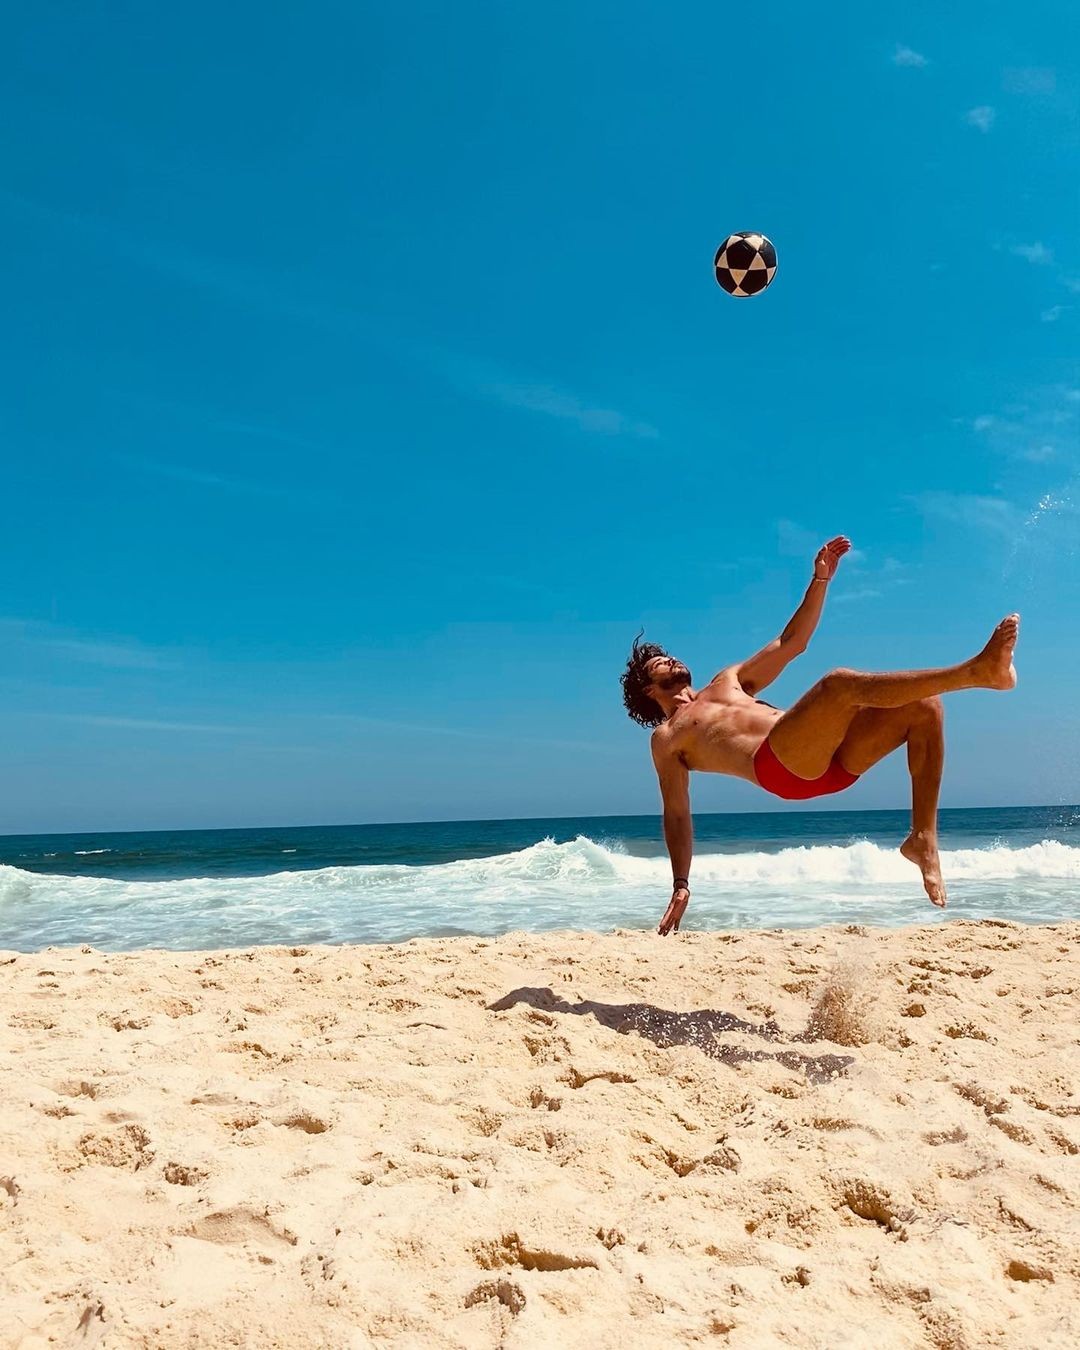 José Loreto impressiona em futebol na praia: 